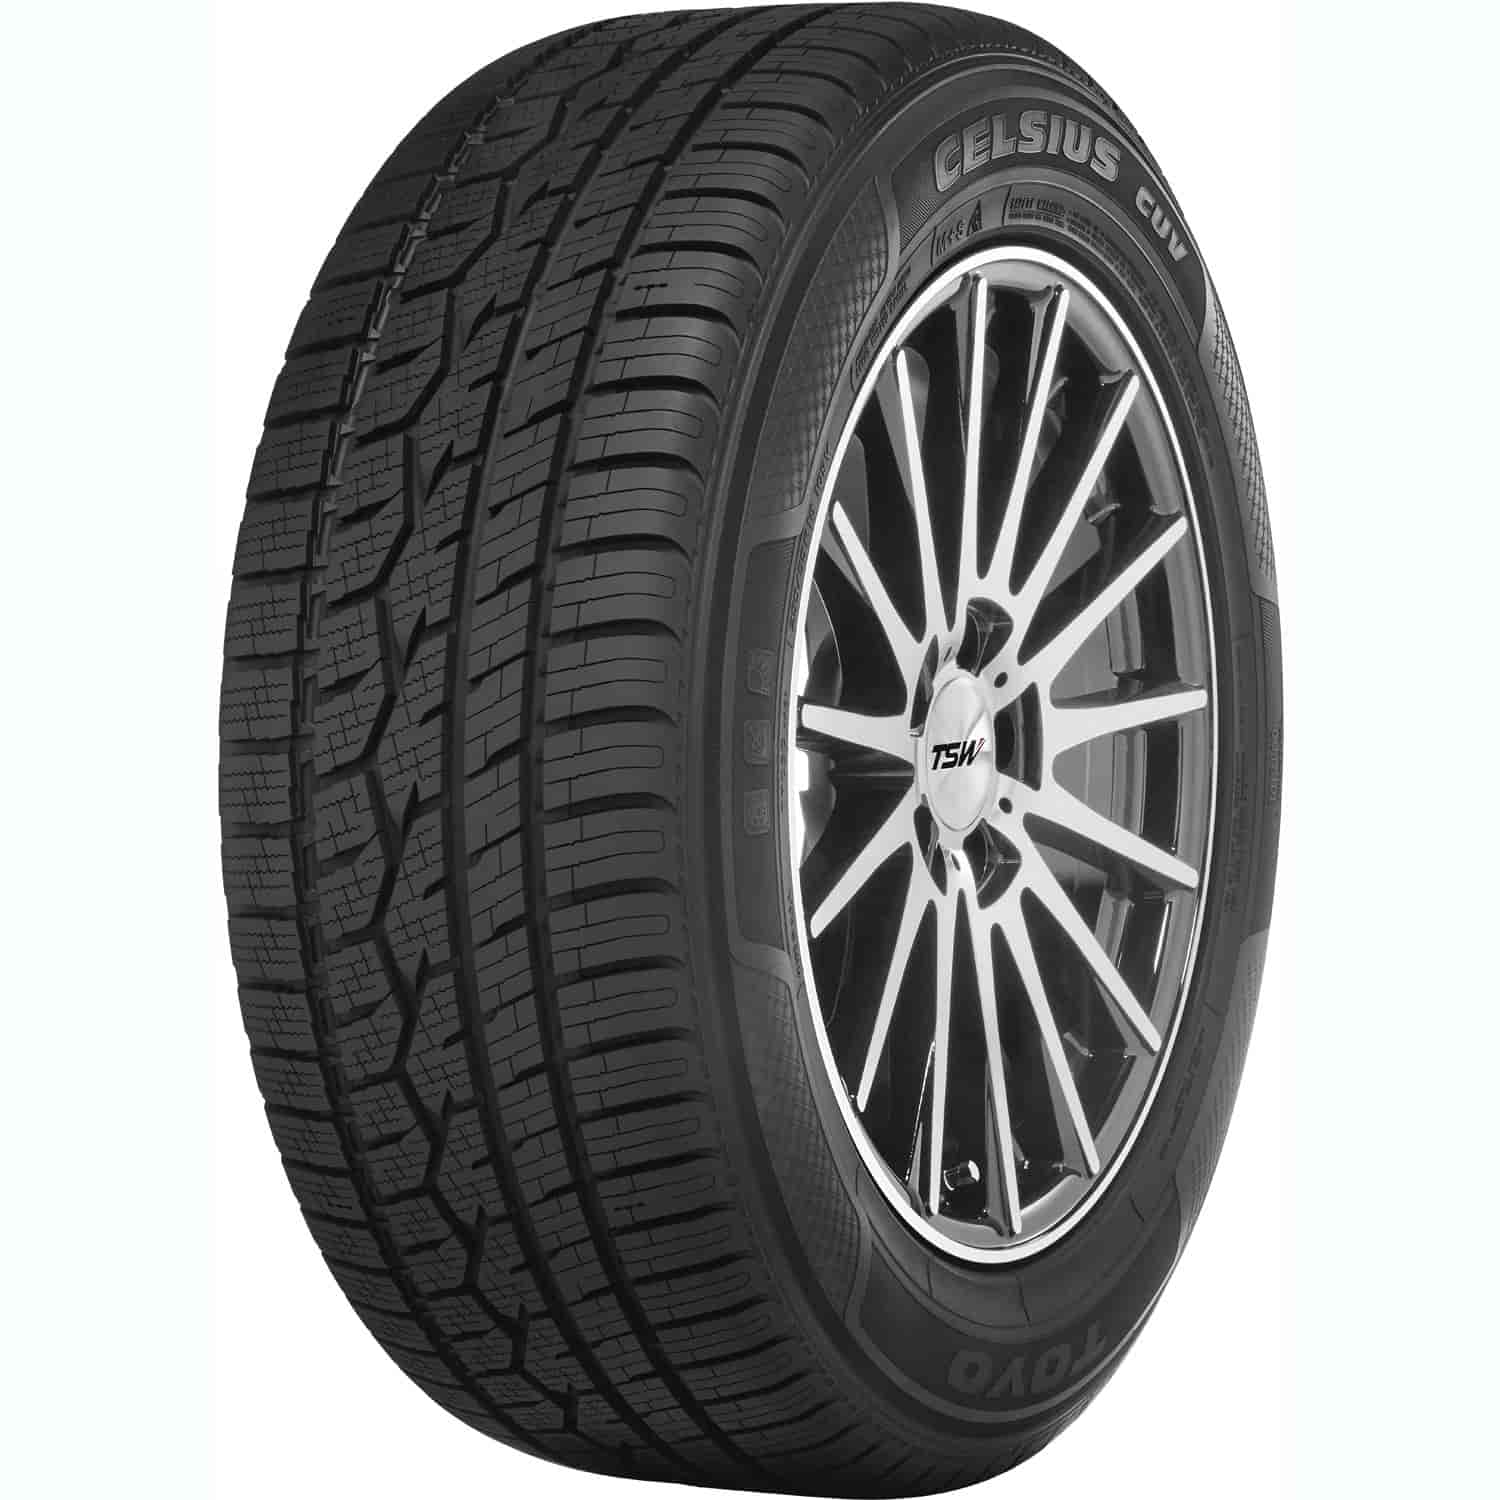 Celsius CUV Tire 275/60R20